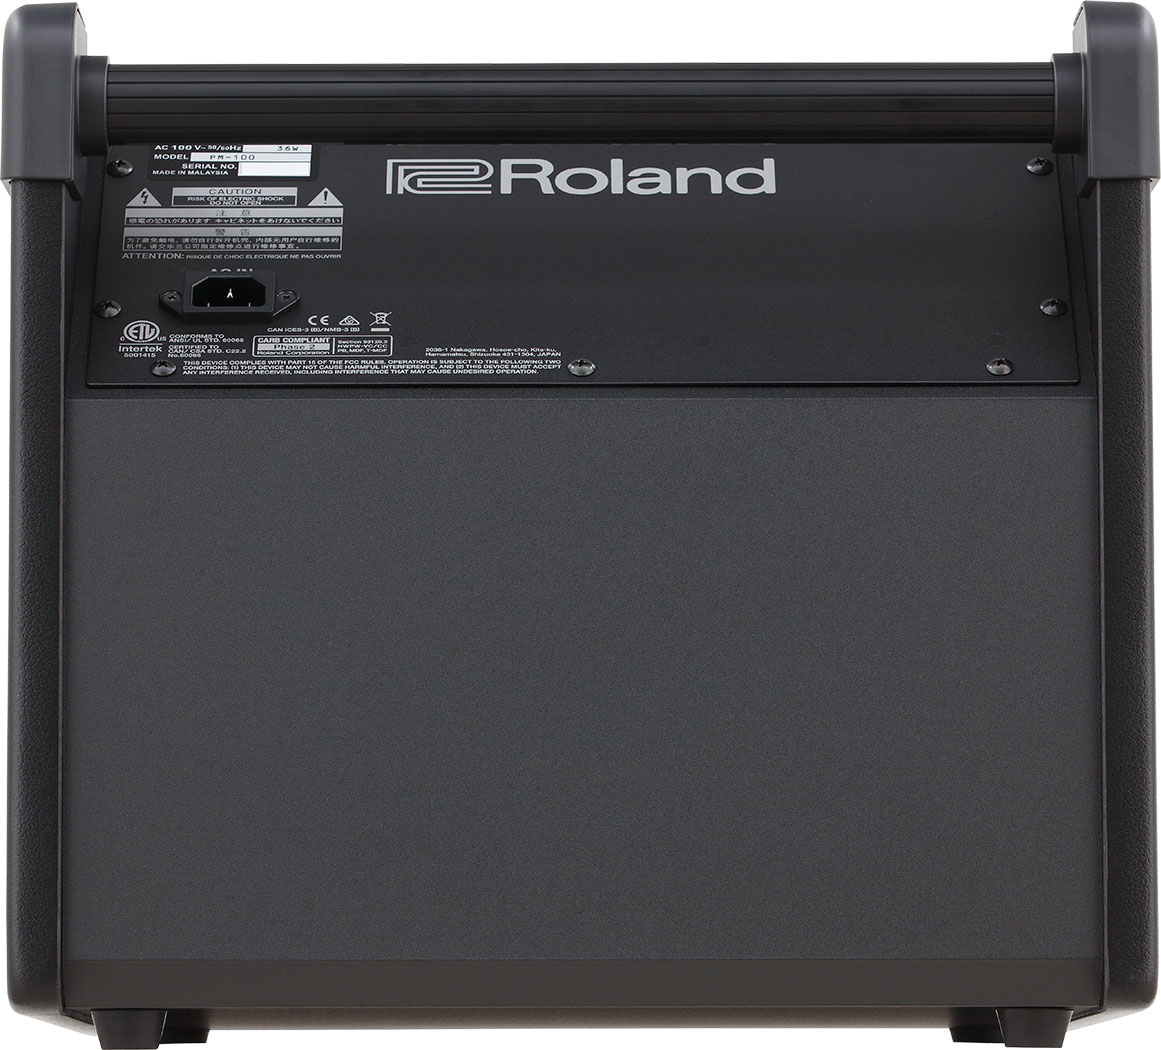 Roland Pm-100 - E-Drum Monitor System - Variation 2